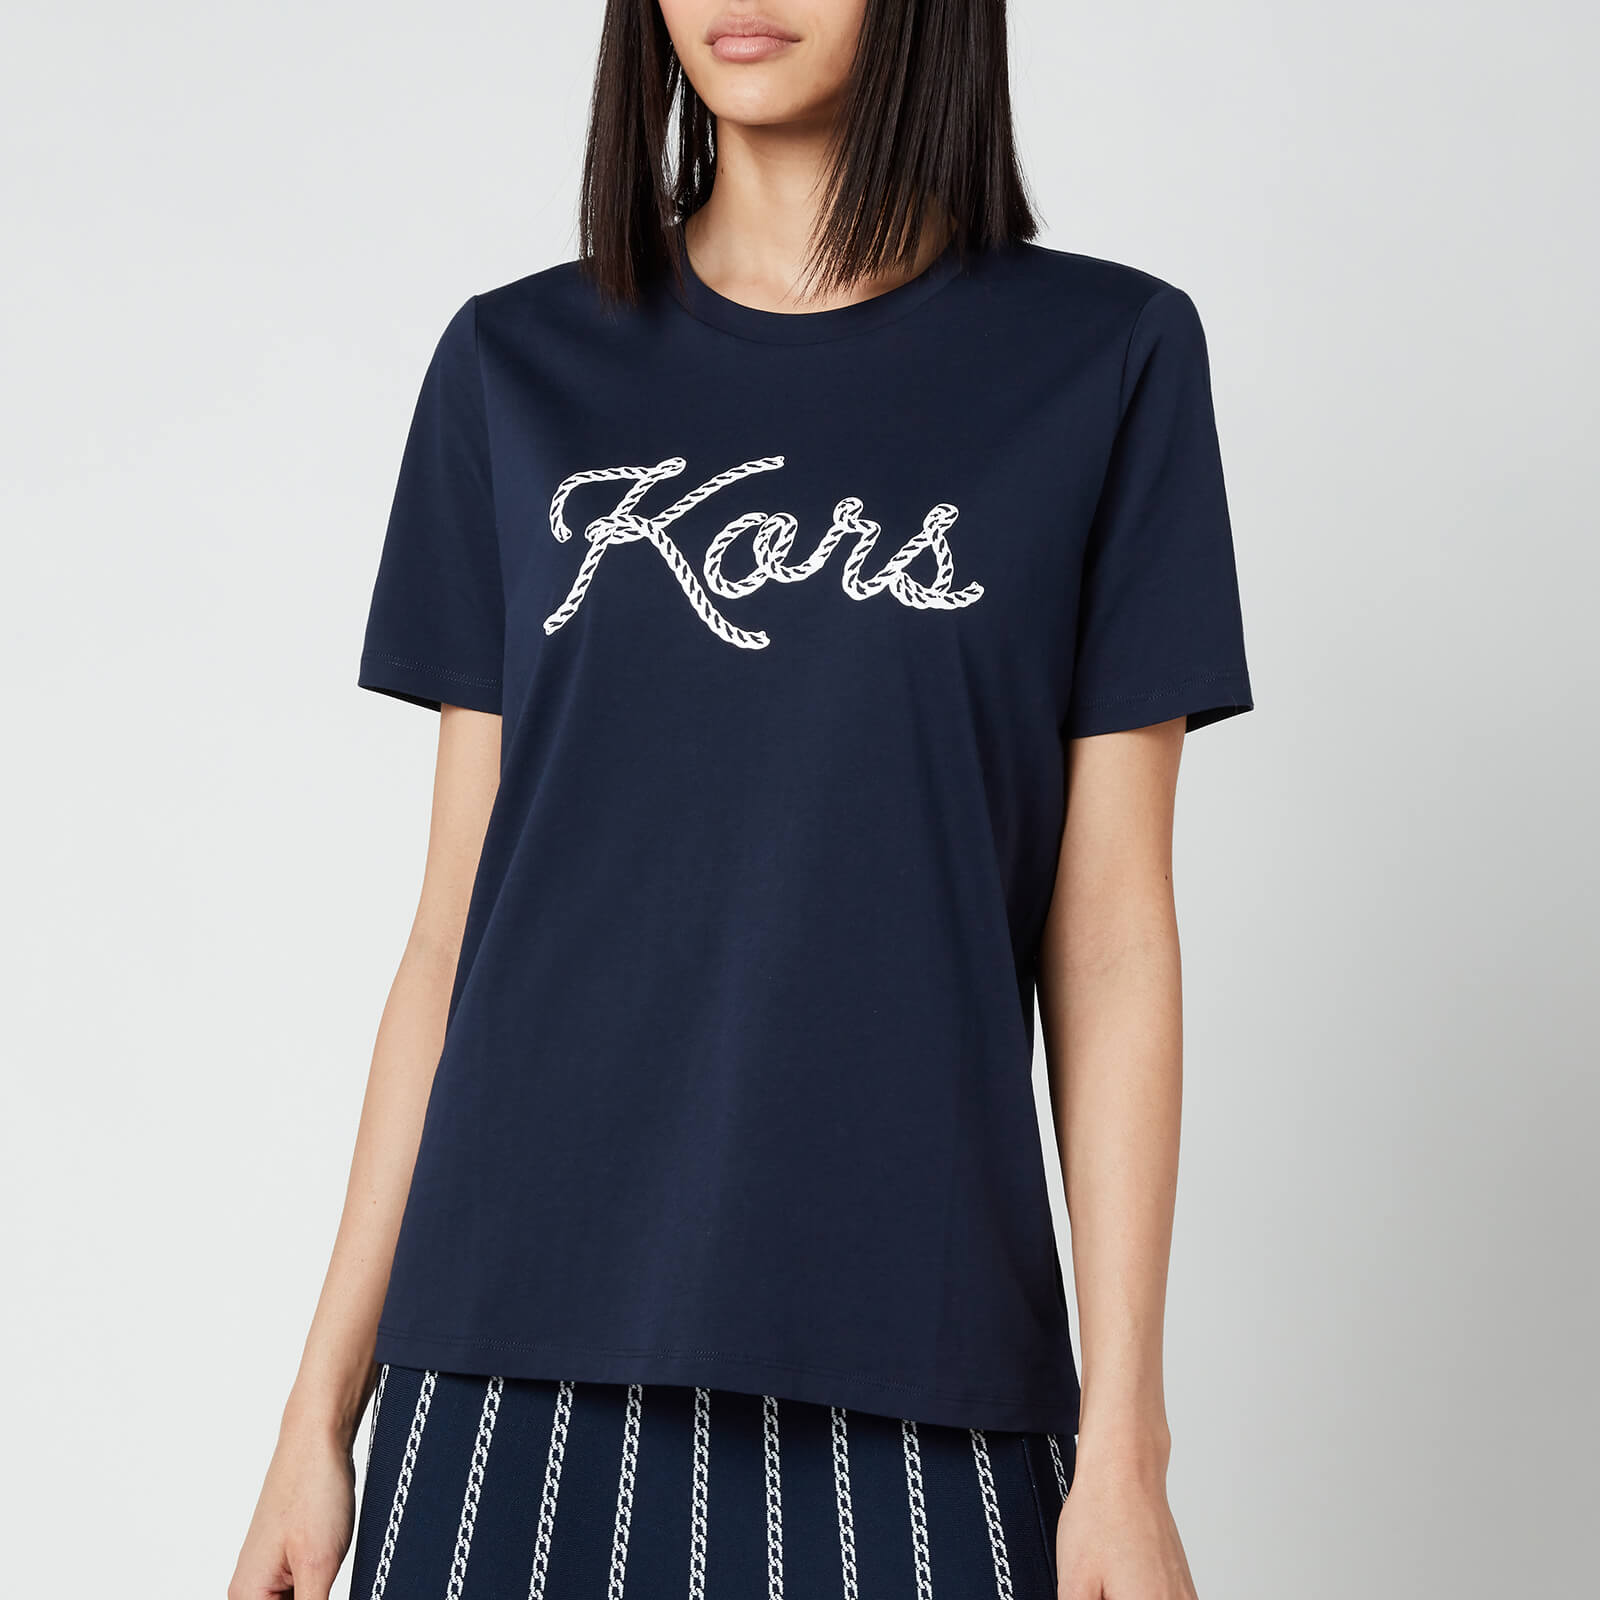 MICHAEL Michael Kors Women's Kors Rope Graphic T-Shirt - Midnight Blue - XS